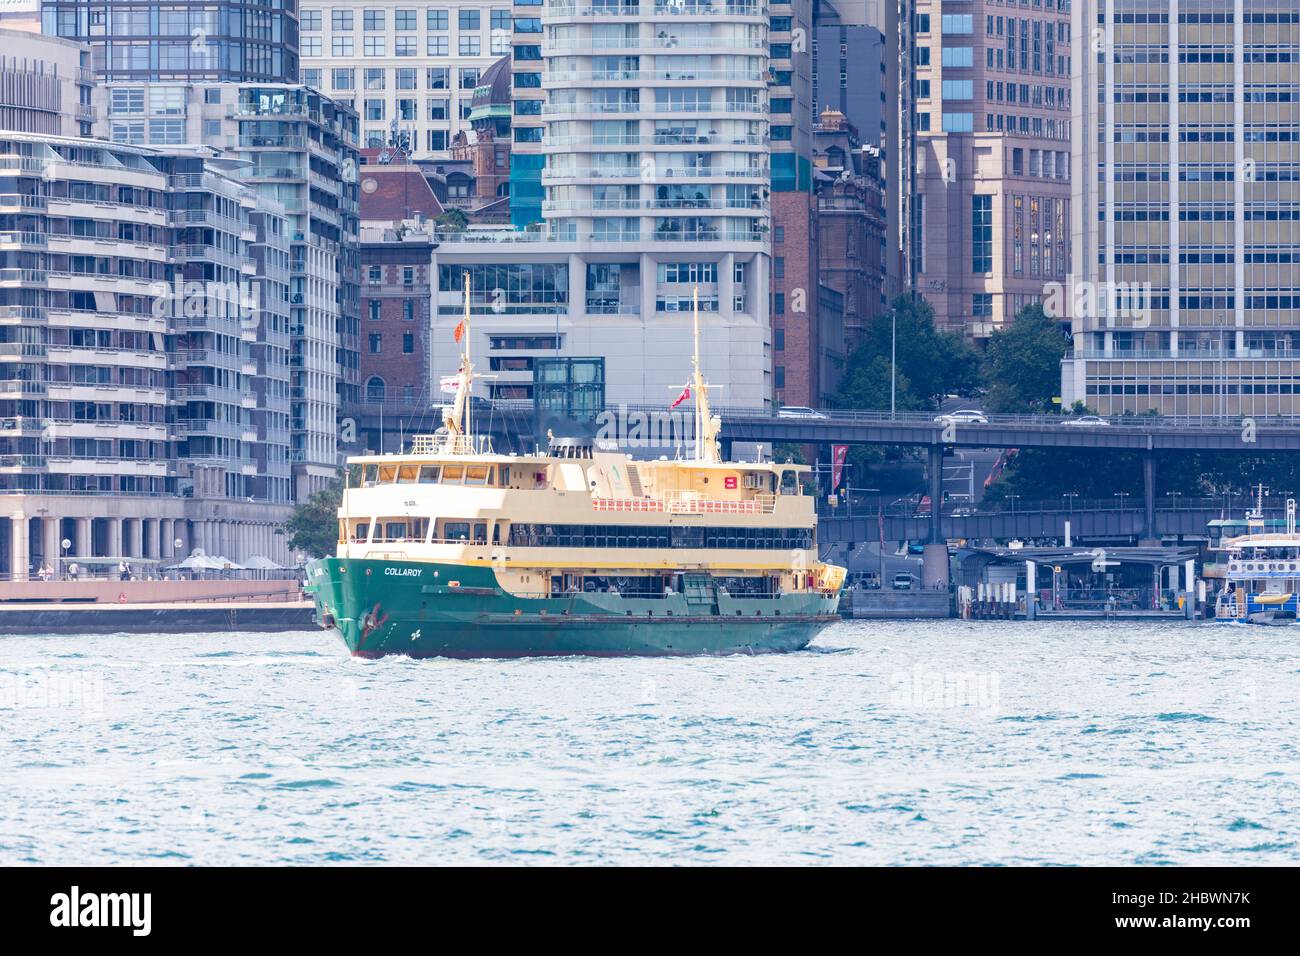 Iconic Sydney ferry, the MV Collaroy ferry, a freshwater class ferry approaches Circular Quay ferry terminal in Sydney,Australia Stock Photo